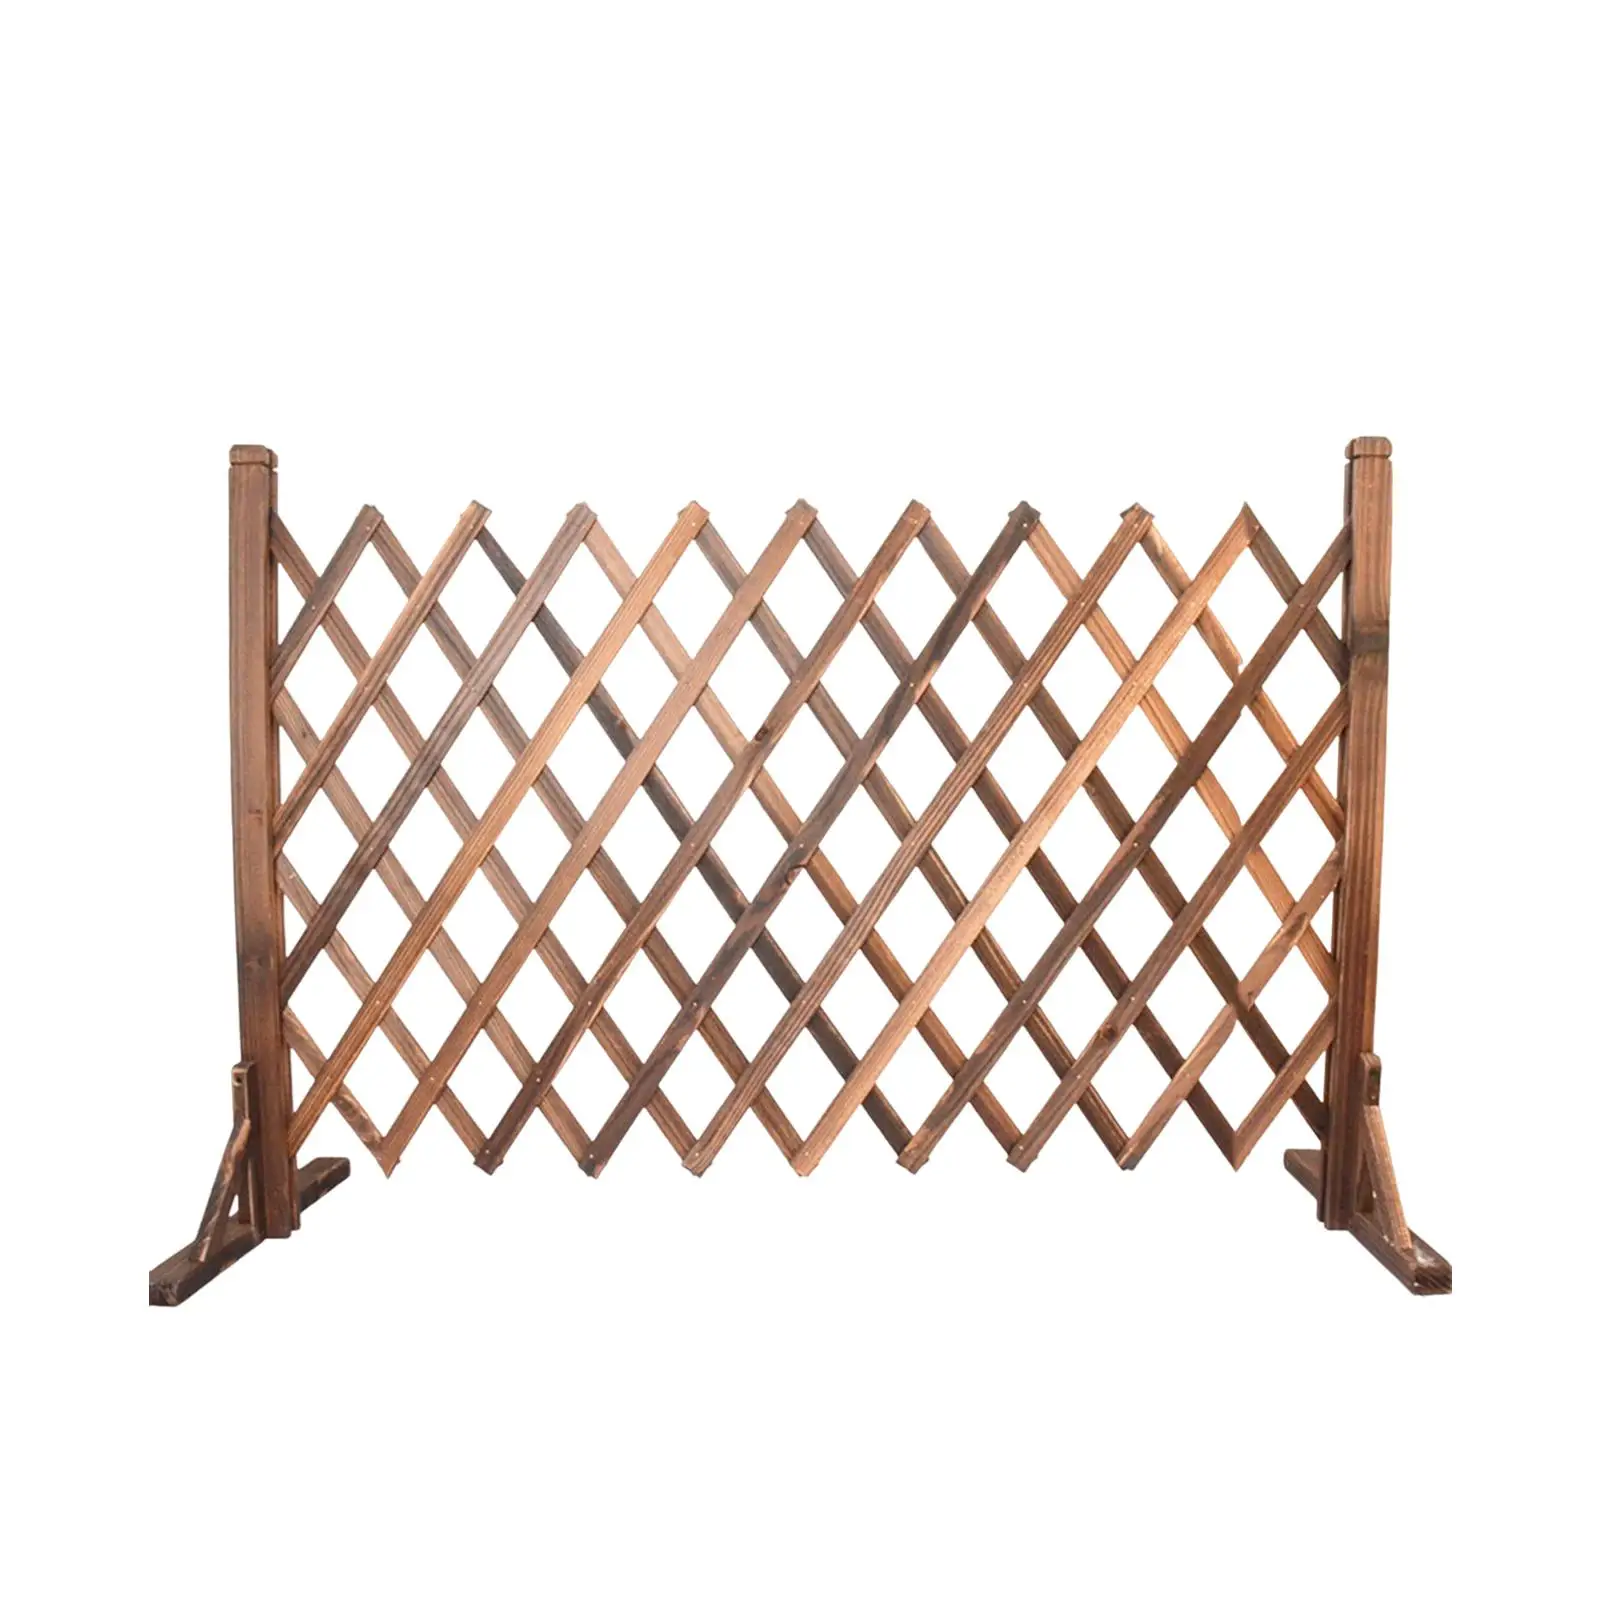 Wooden Fence Extendable Trellis Fence Lattice Fence for Garden Balcony